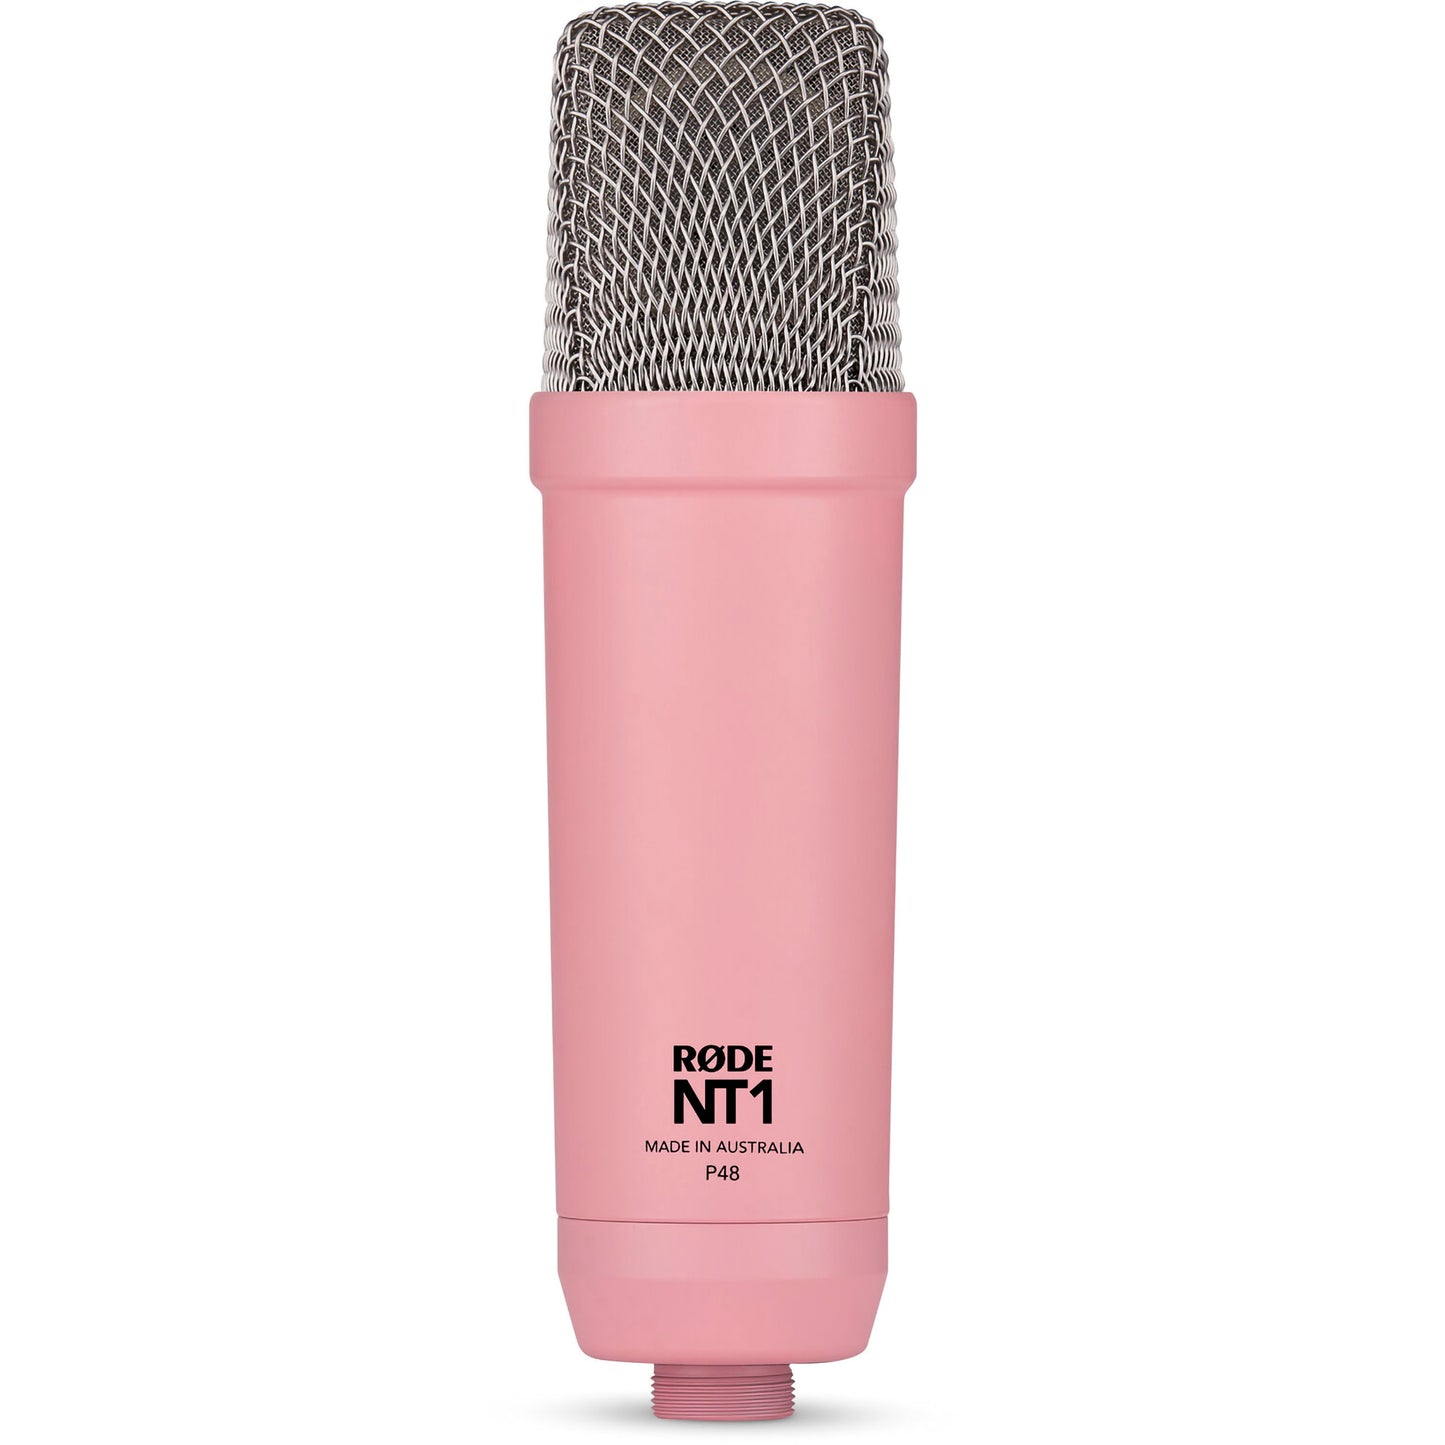 Rode NT1 Signature Series Studio Condenser Microphone, Pink